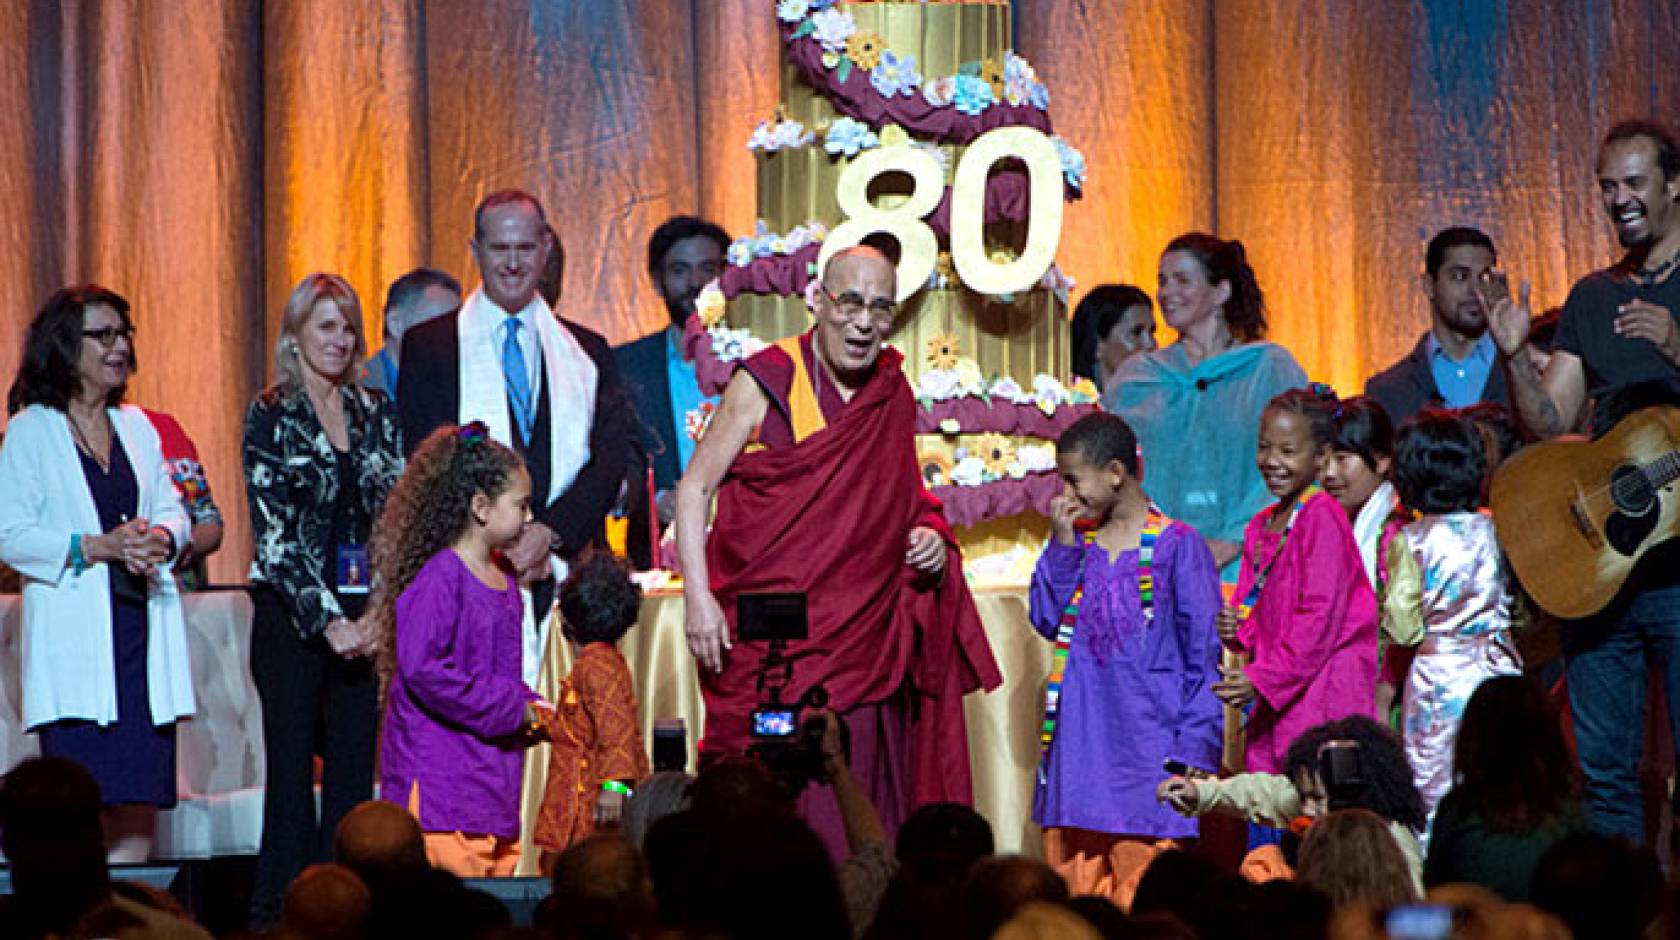 Dalai Lama birthday celebration